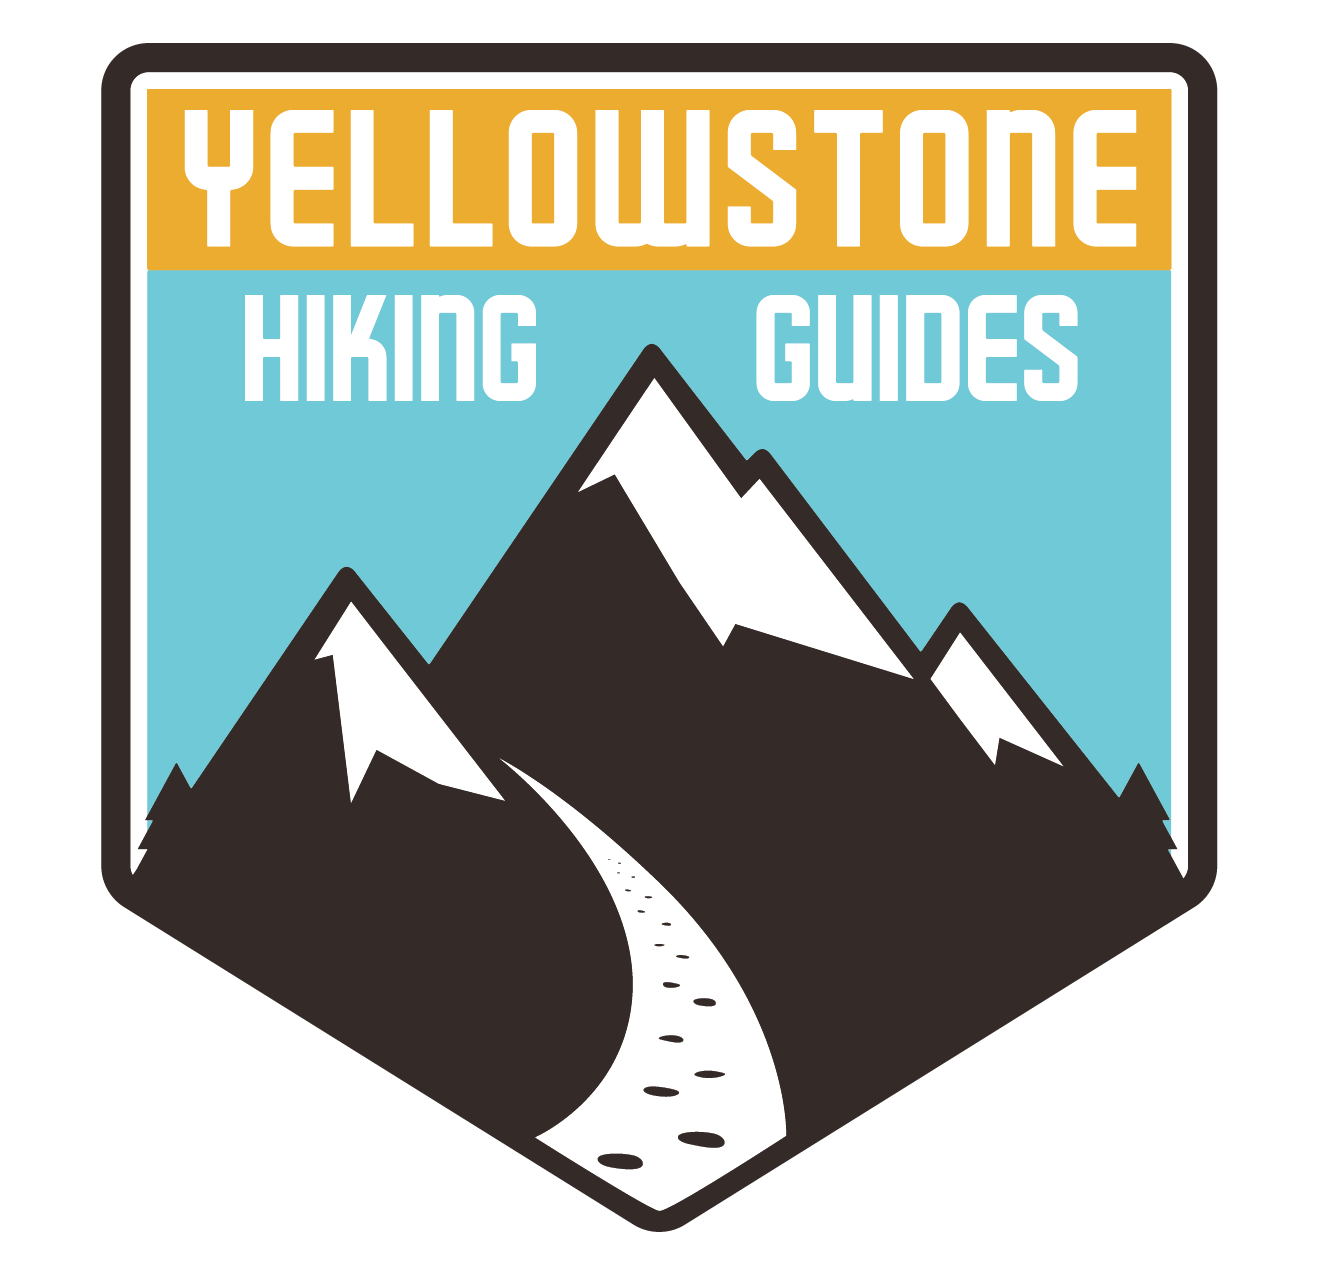 Yellowstone Hiking Guides